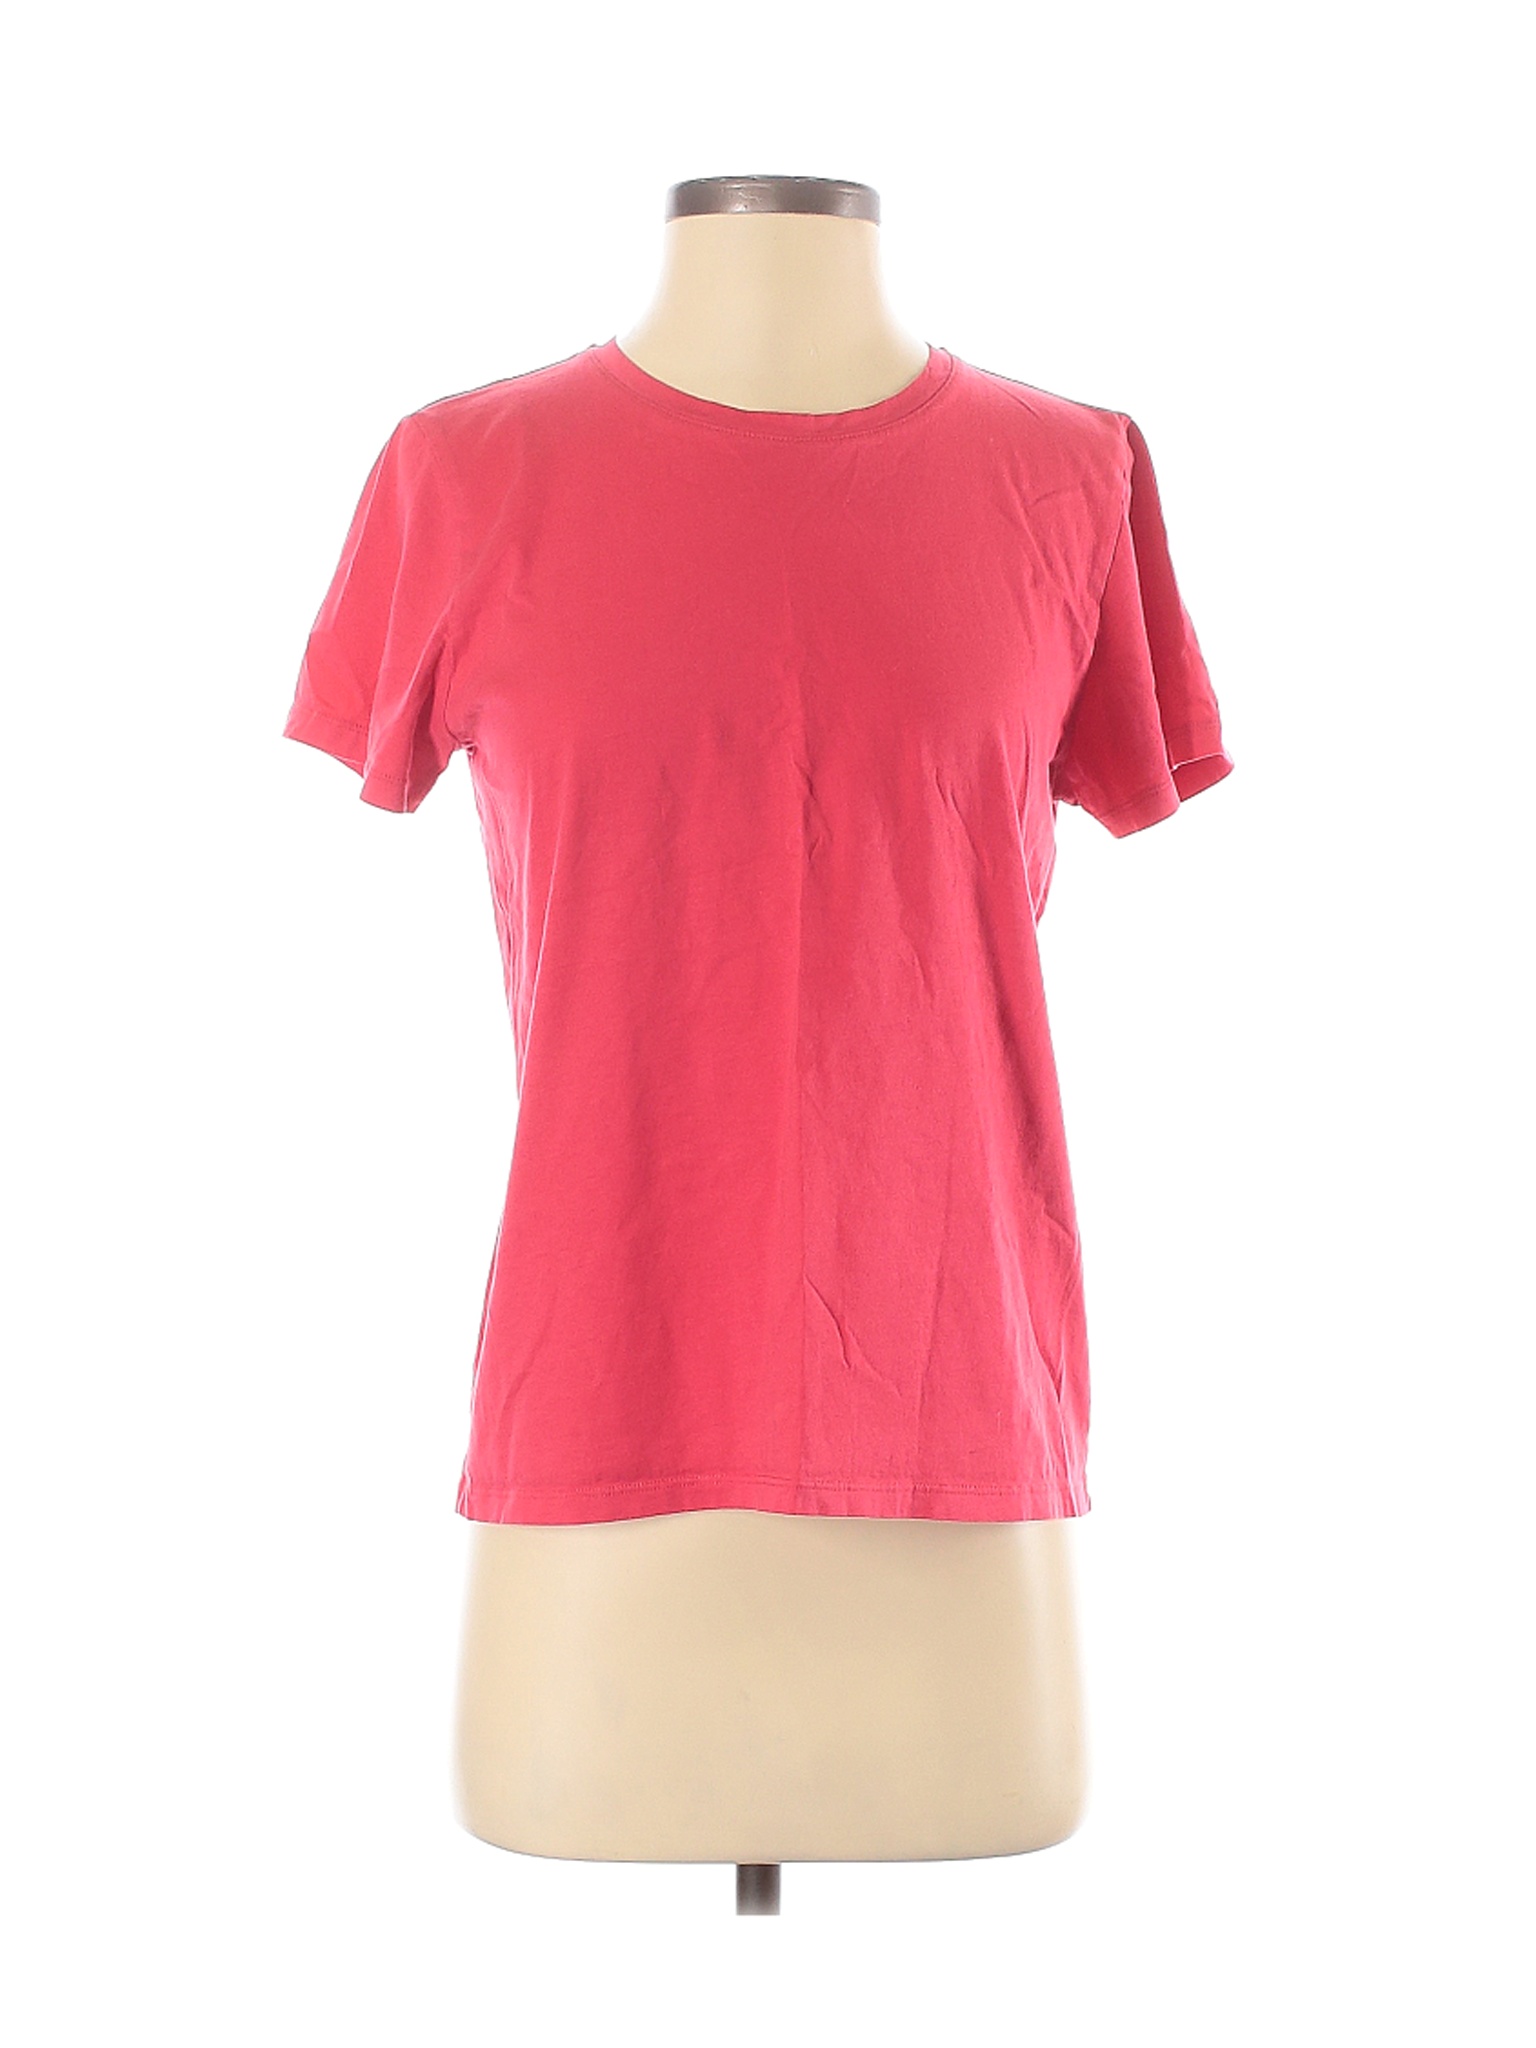 Uniqlo Women Pink Short Sleeve T-Shirt S | eBay